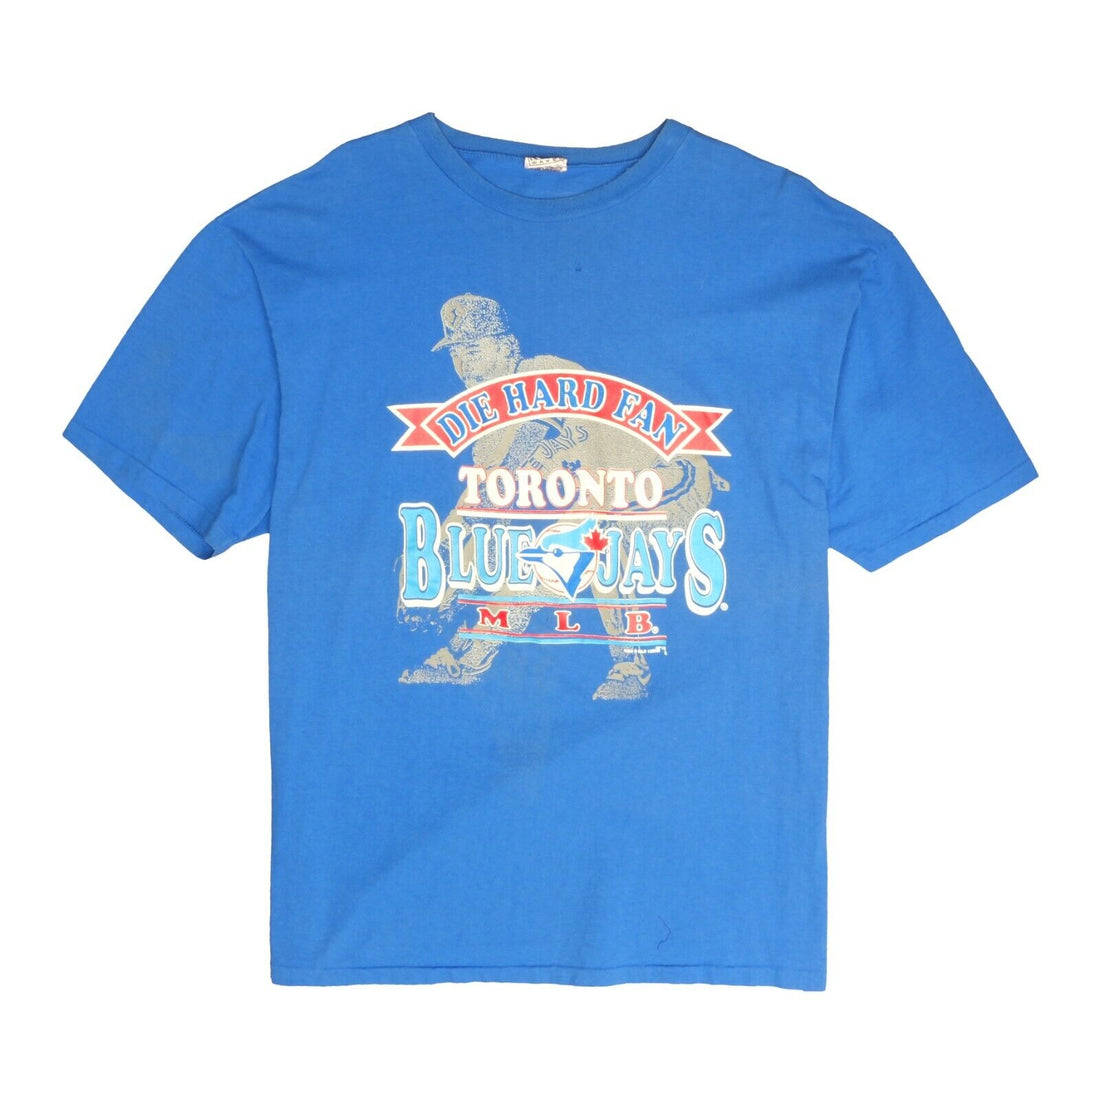 Kids MLB Blue Jays Toronto 1990's Vintage T-shirt 